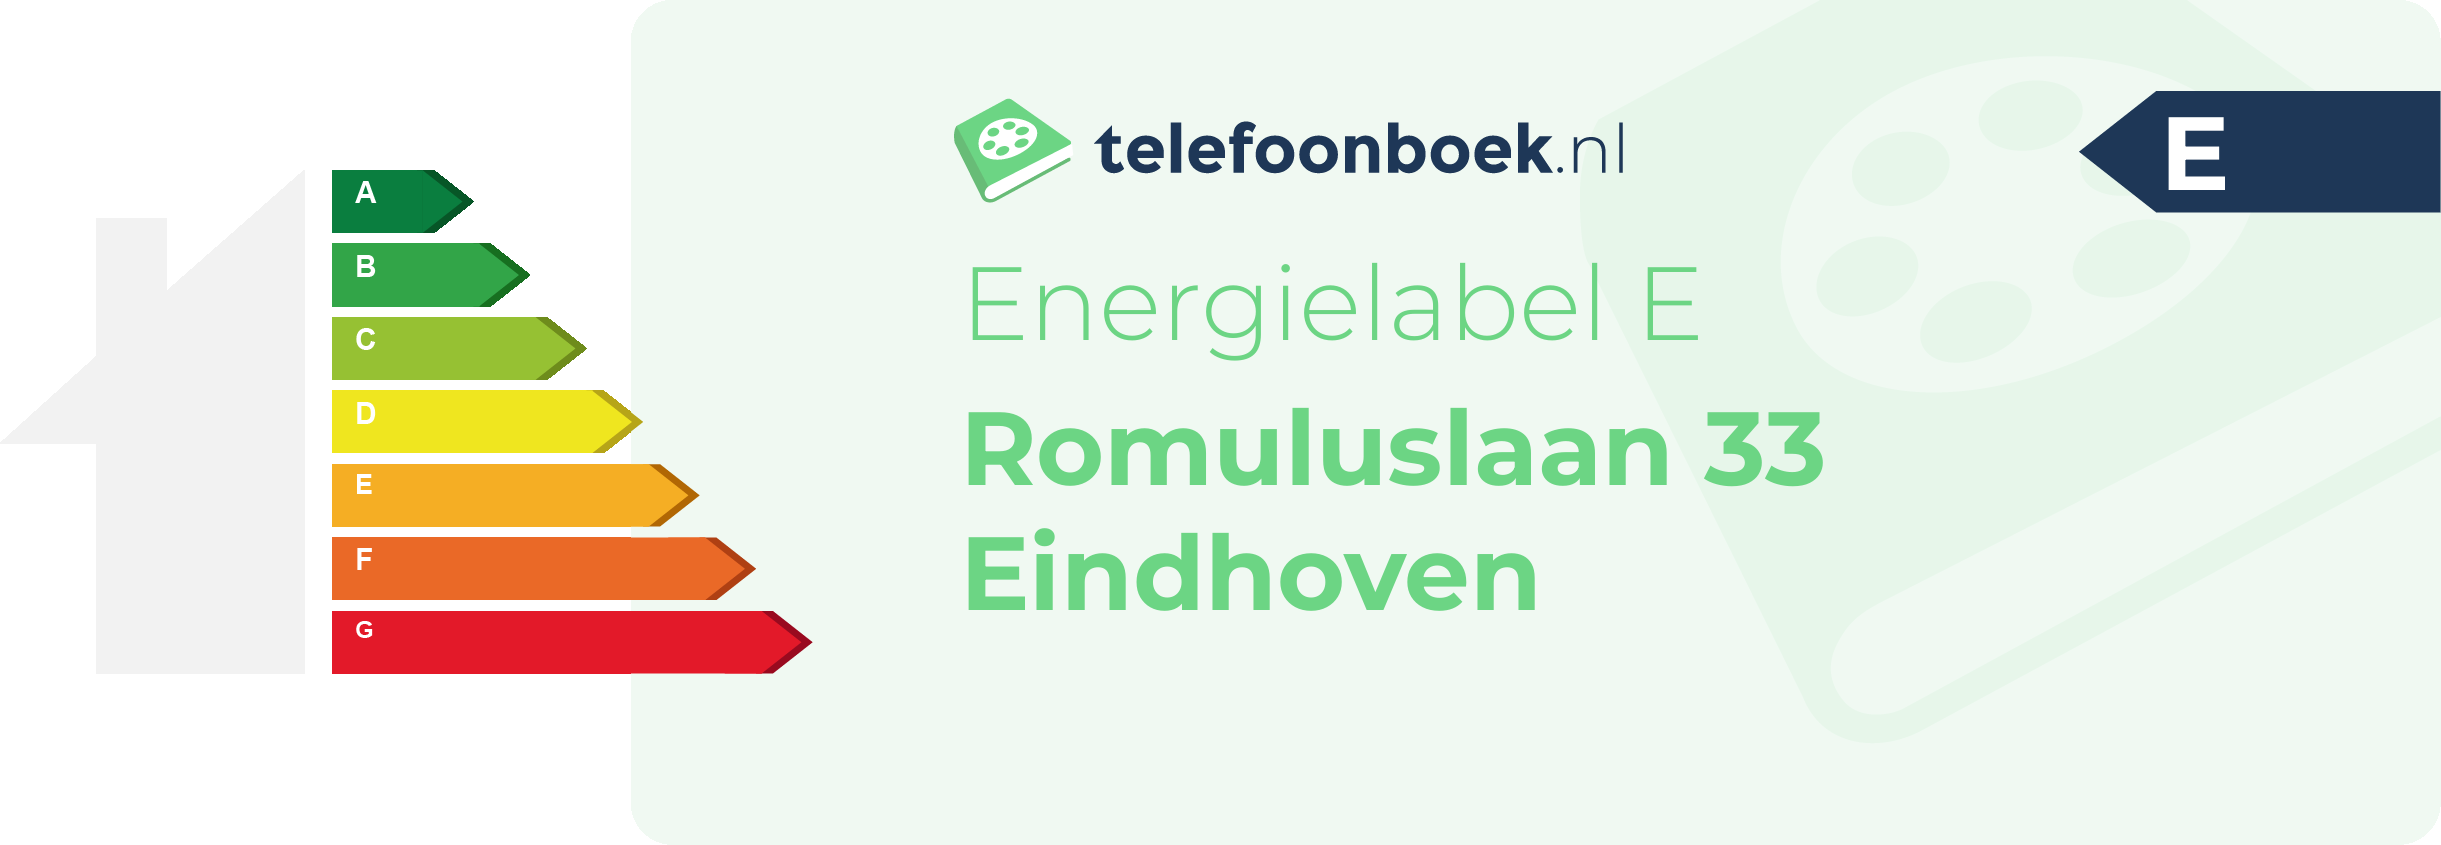 Energielabel Romuluslaan 33 Eindhoven